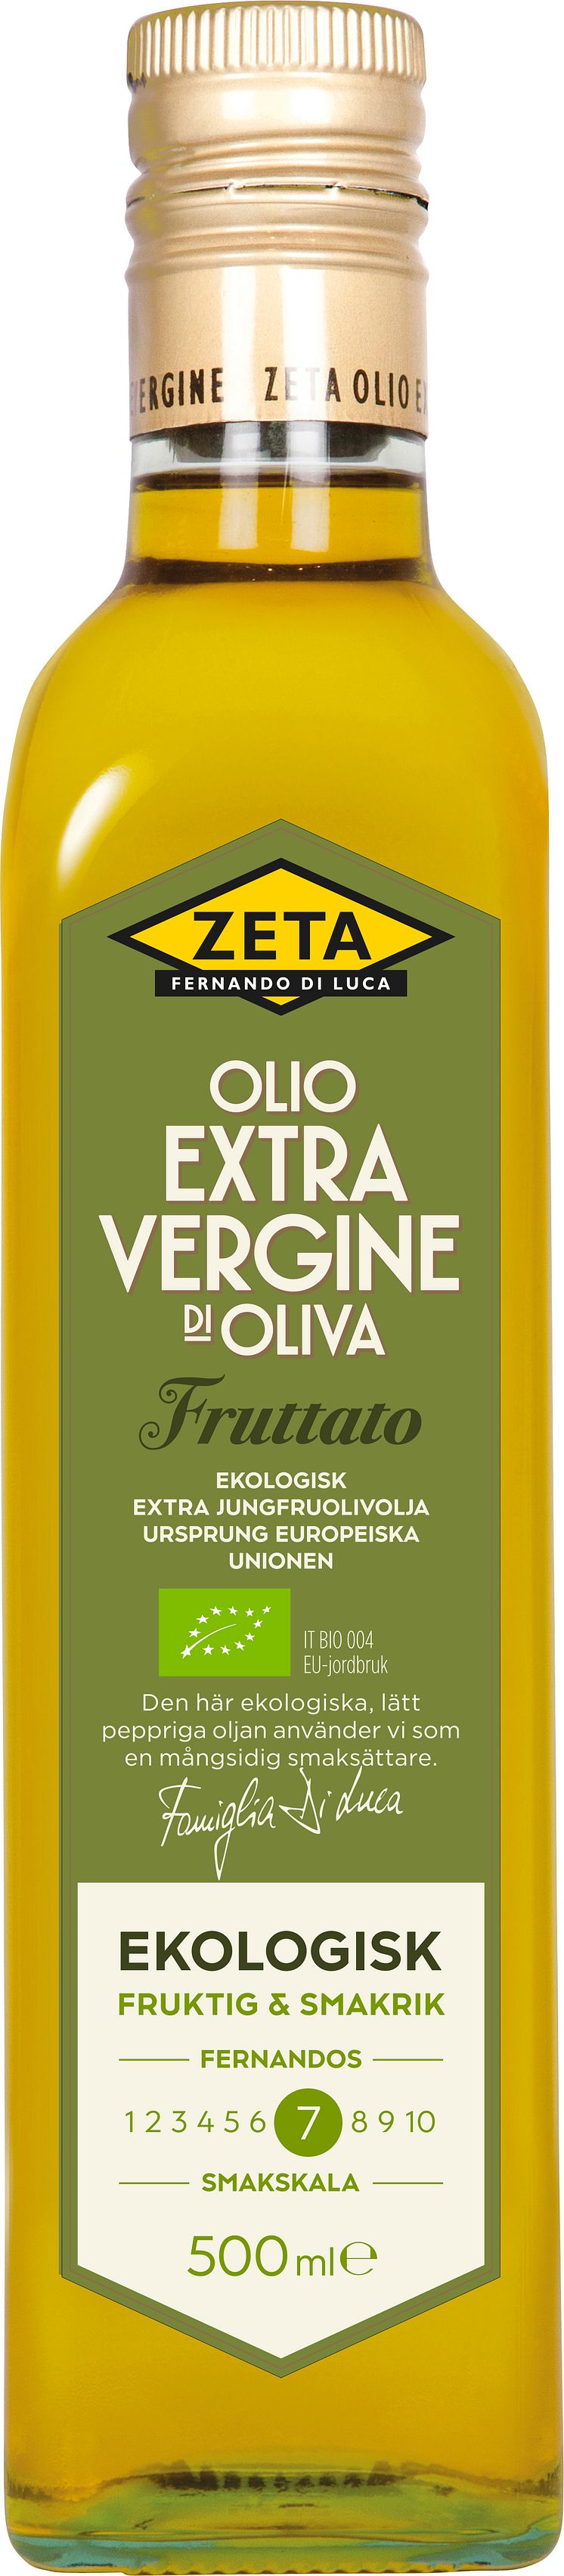 Ekologisk olivolja fruttato från Zeta